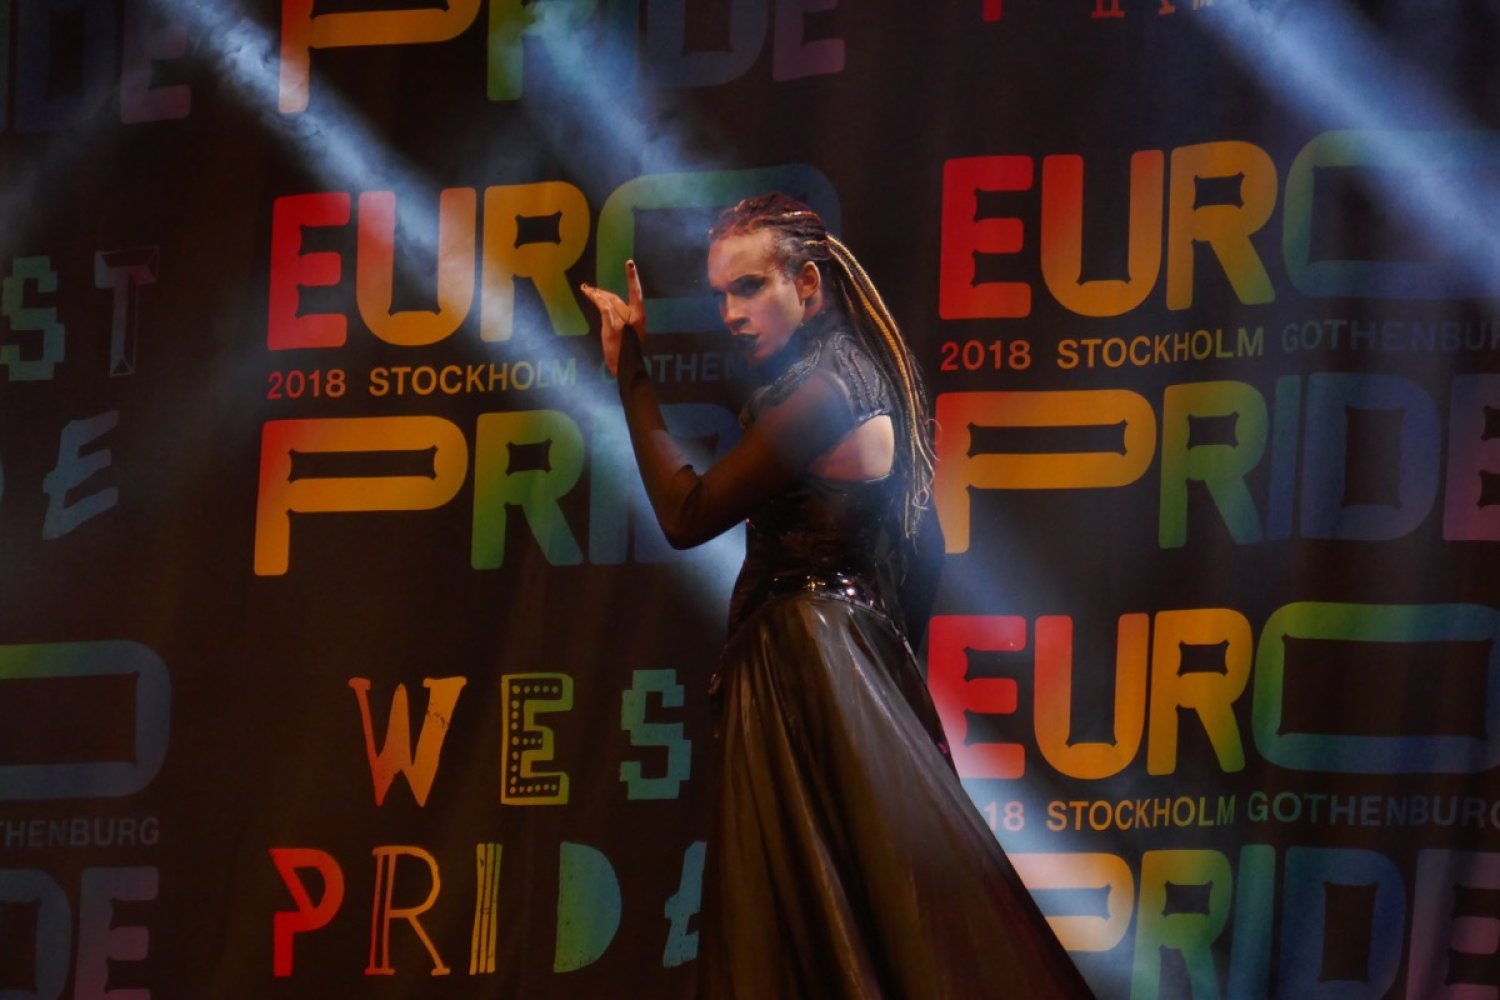 Show Drag Queens à l'Europride